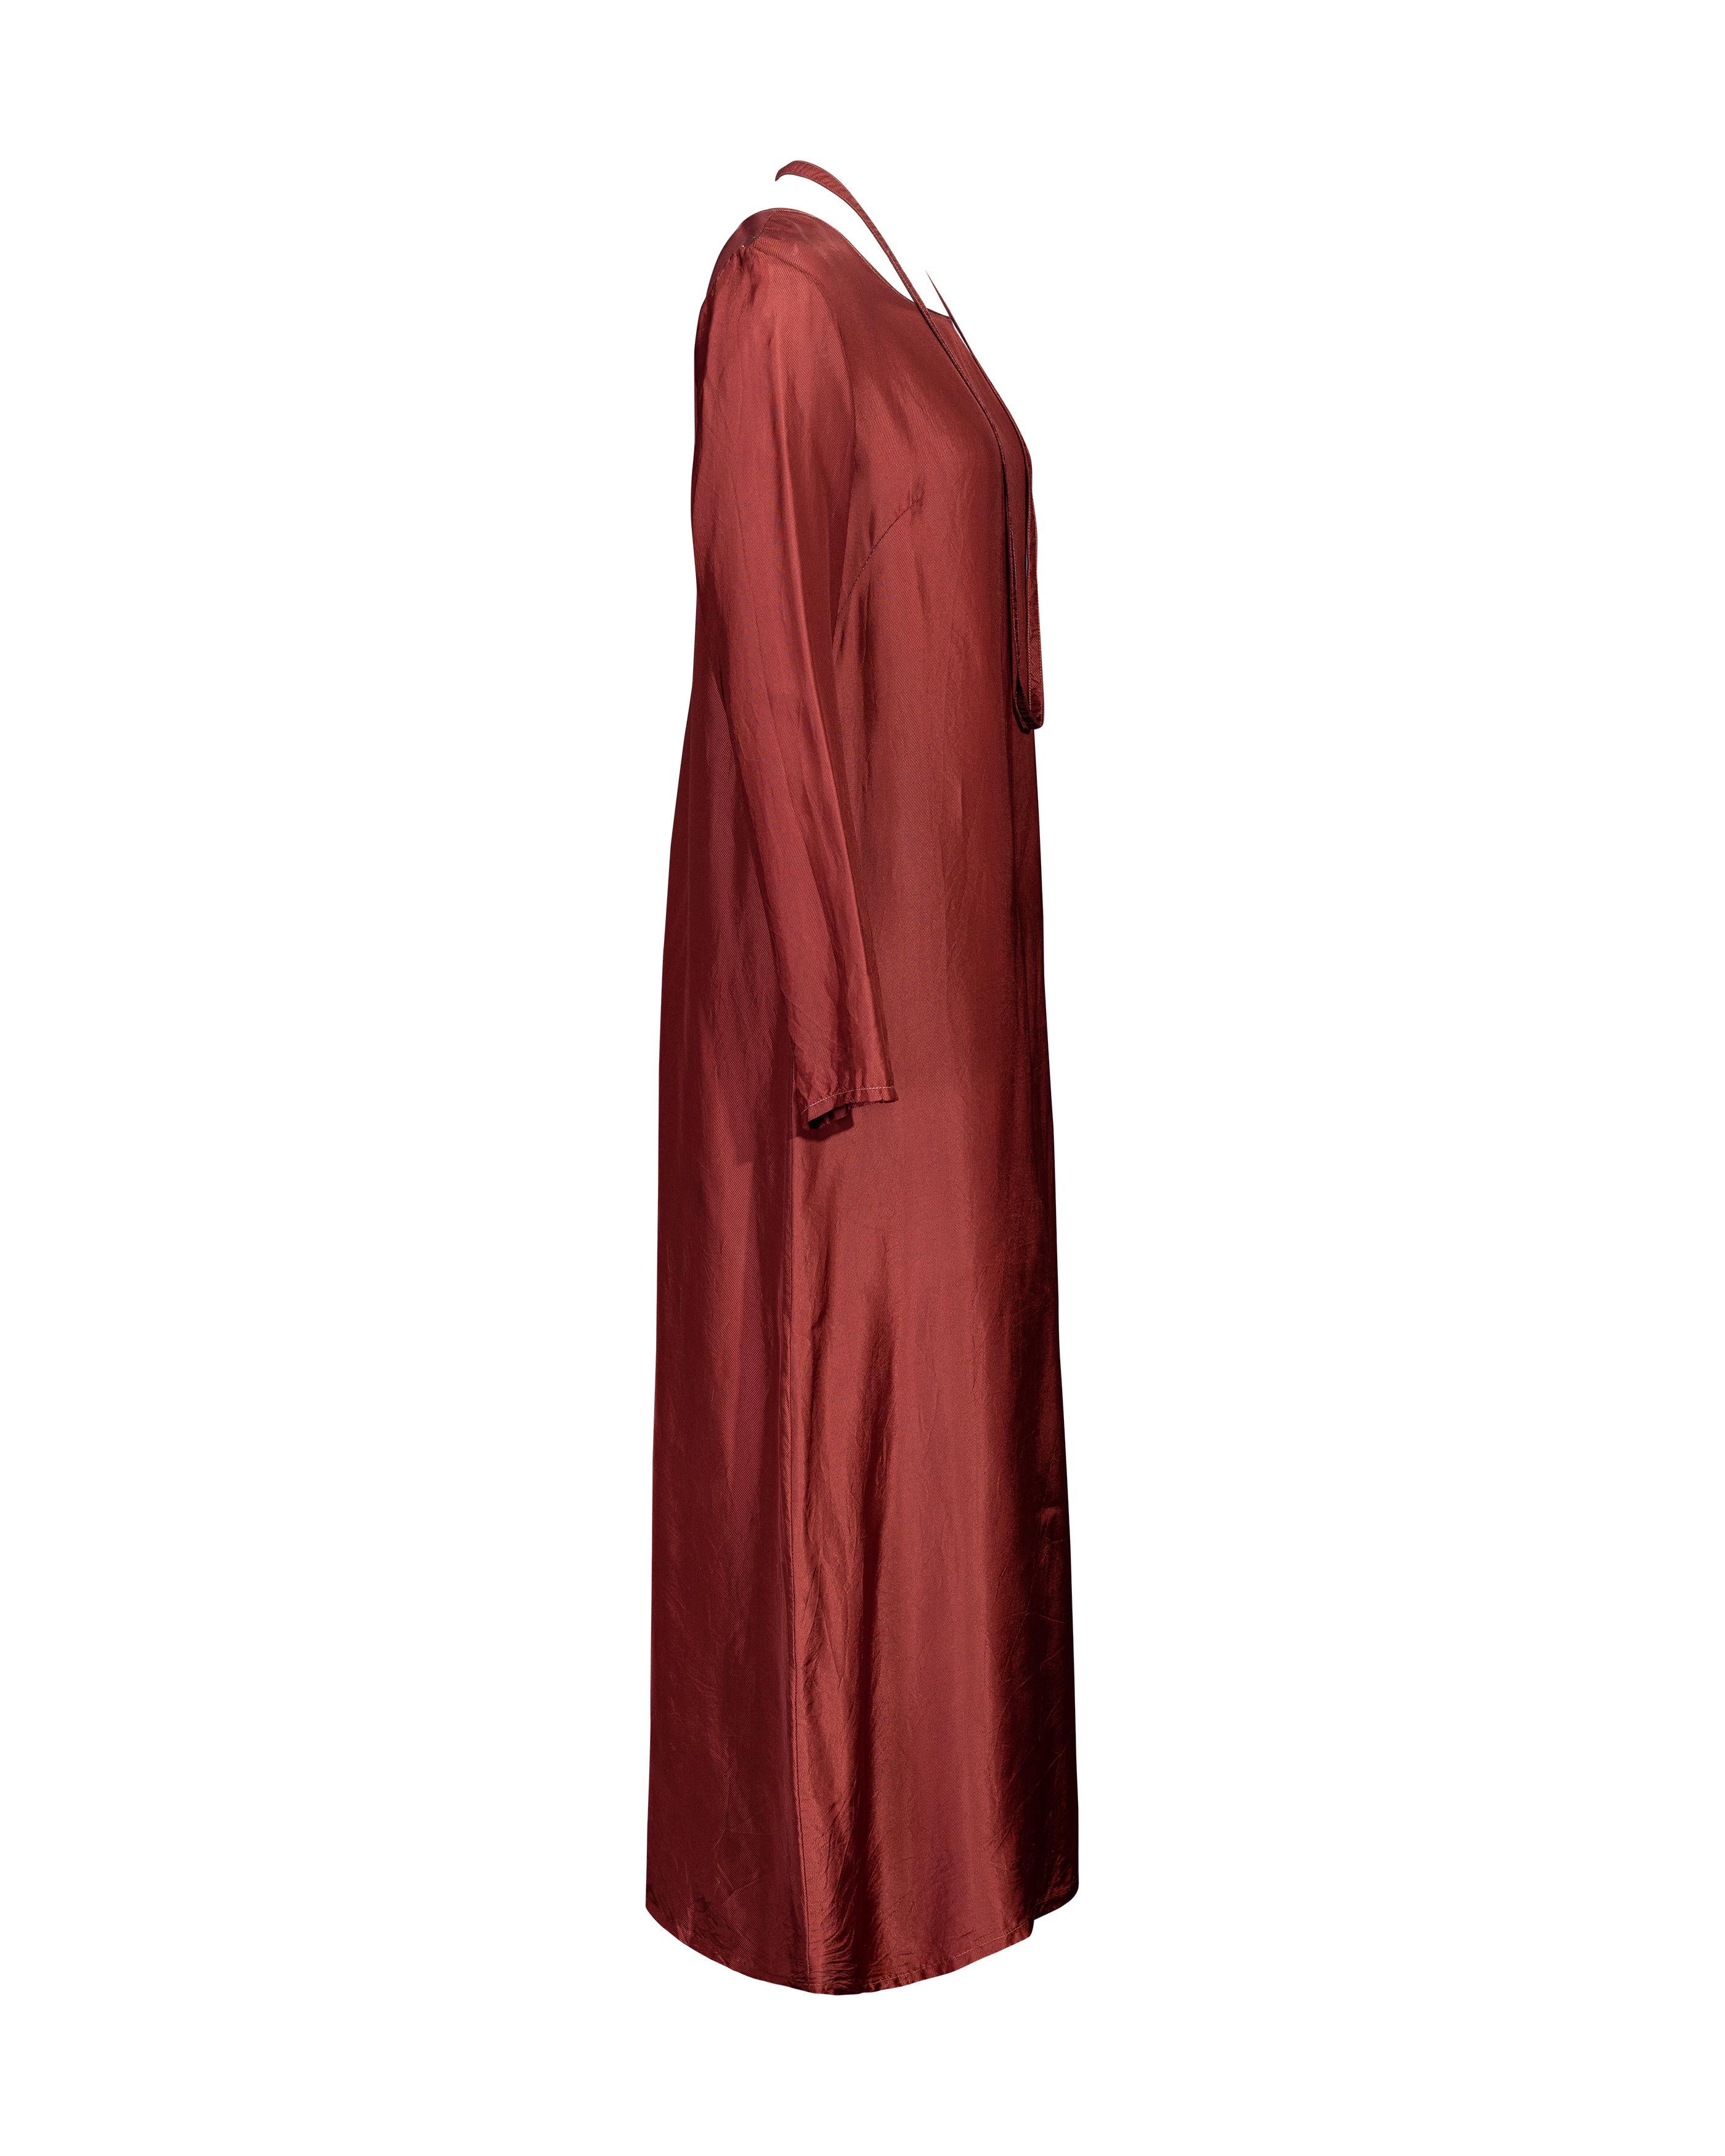 Women's A/W 1999 Maison Martin Margiela Deep Rust Color-way 'Lining' Long Sleeve Dress For Sale